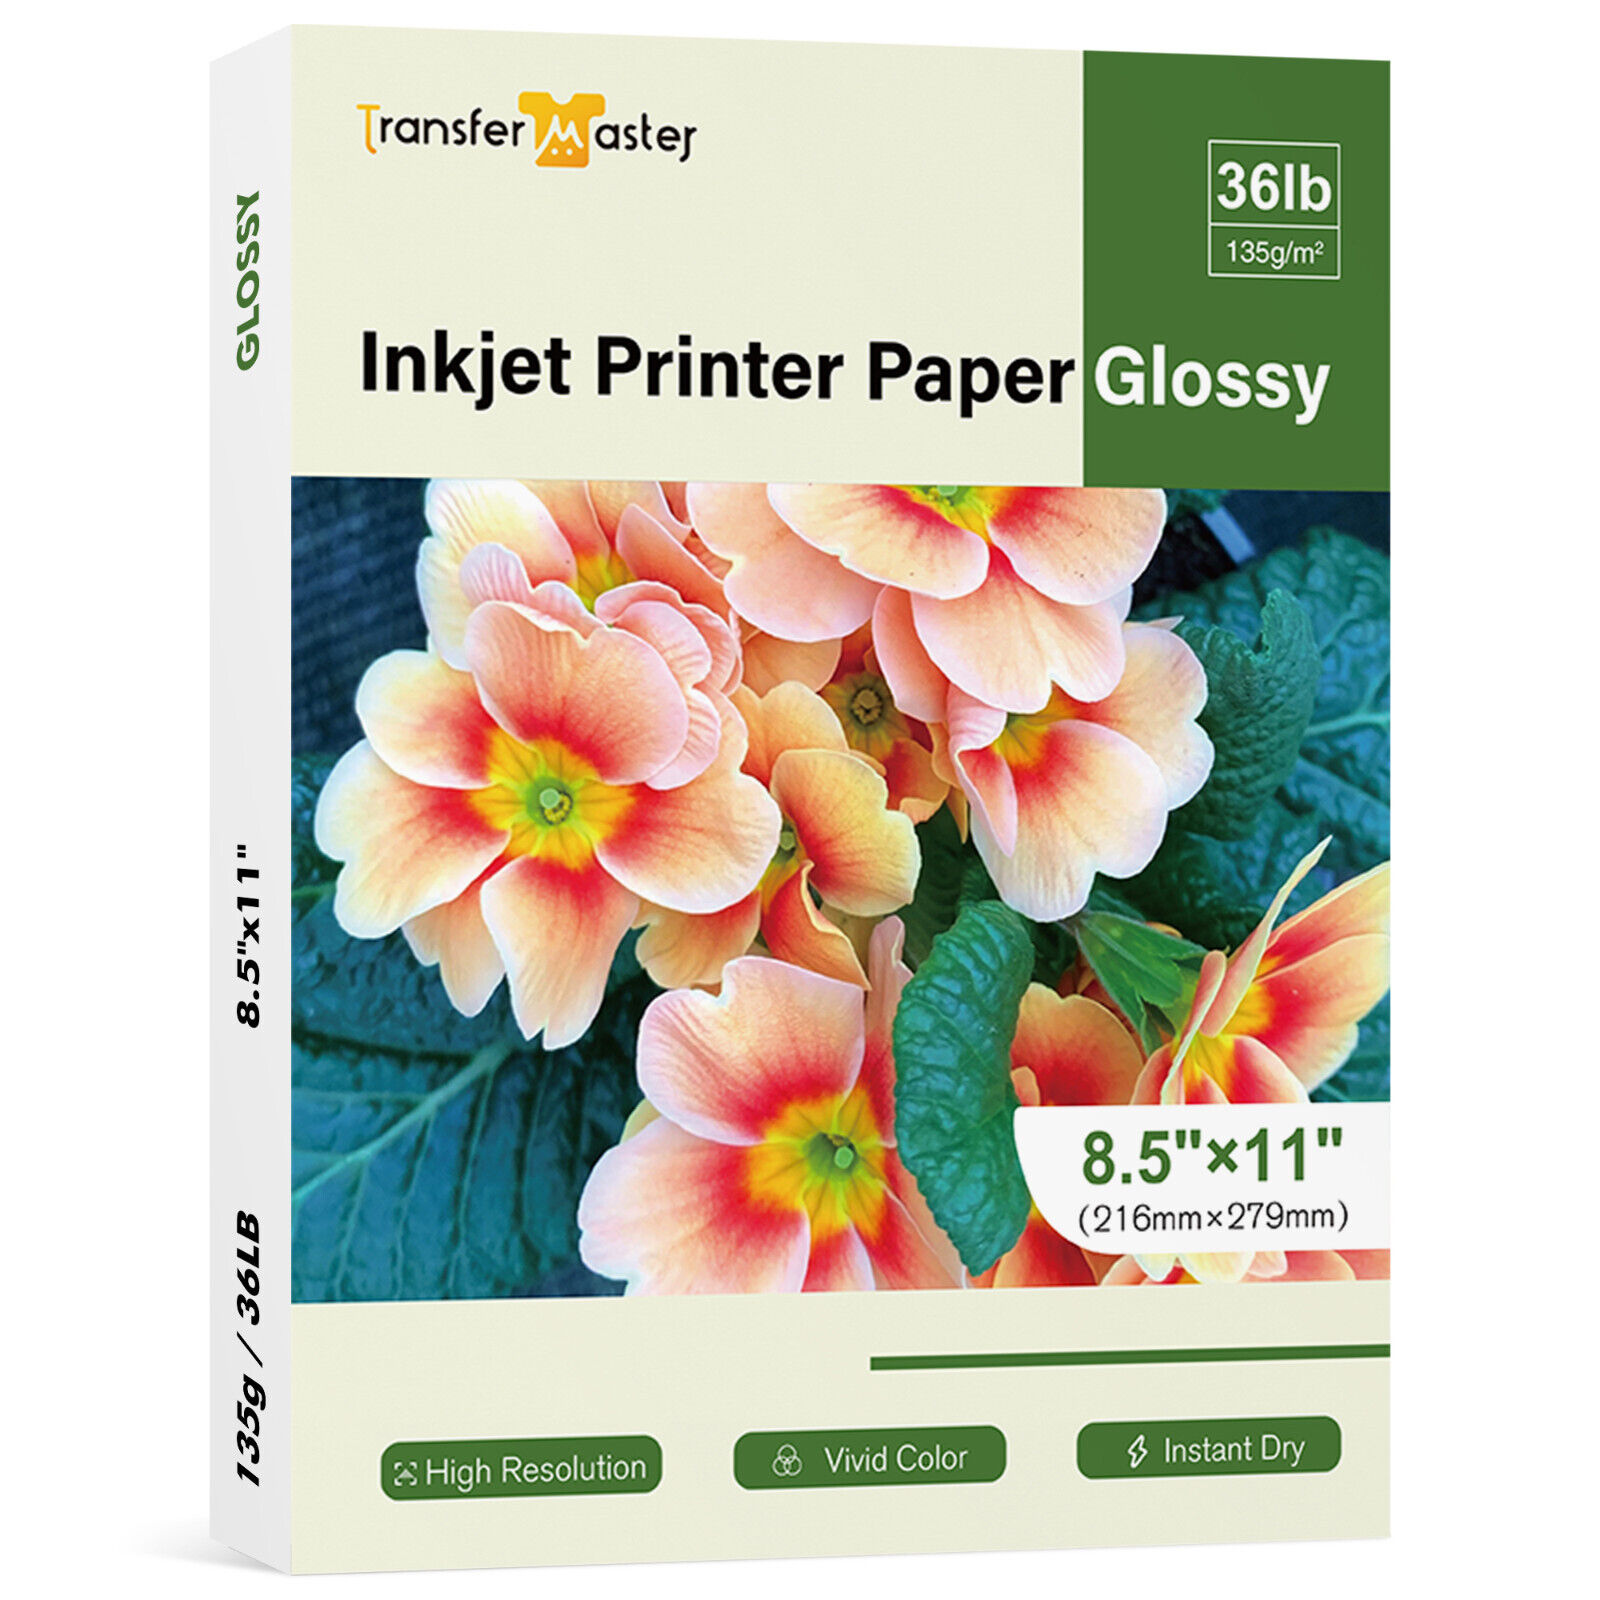 Lot 150-300 Sheet Thin Glossy Photo Paper 8.5x11 36lb Inkjet Printer Flyer Paper